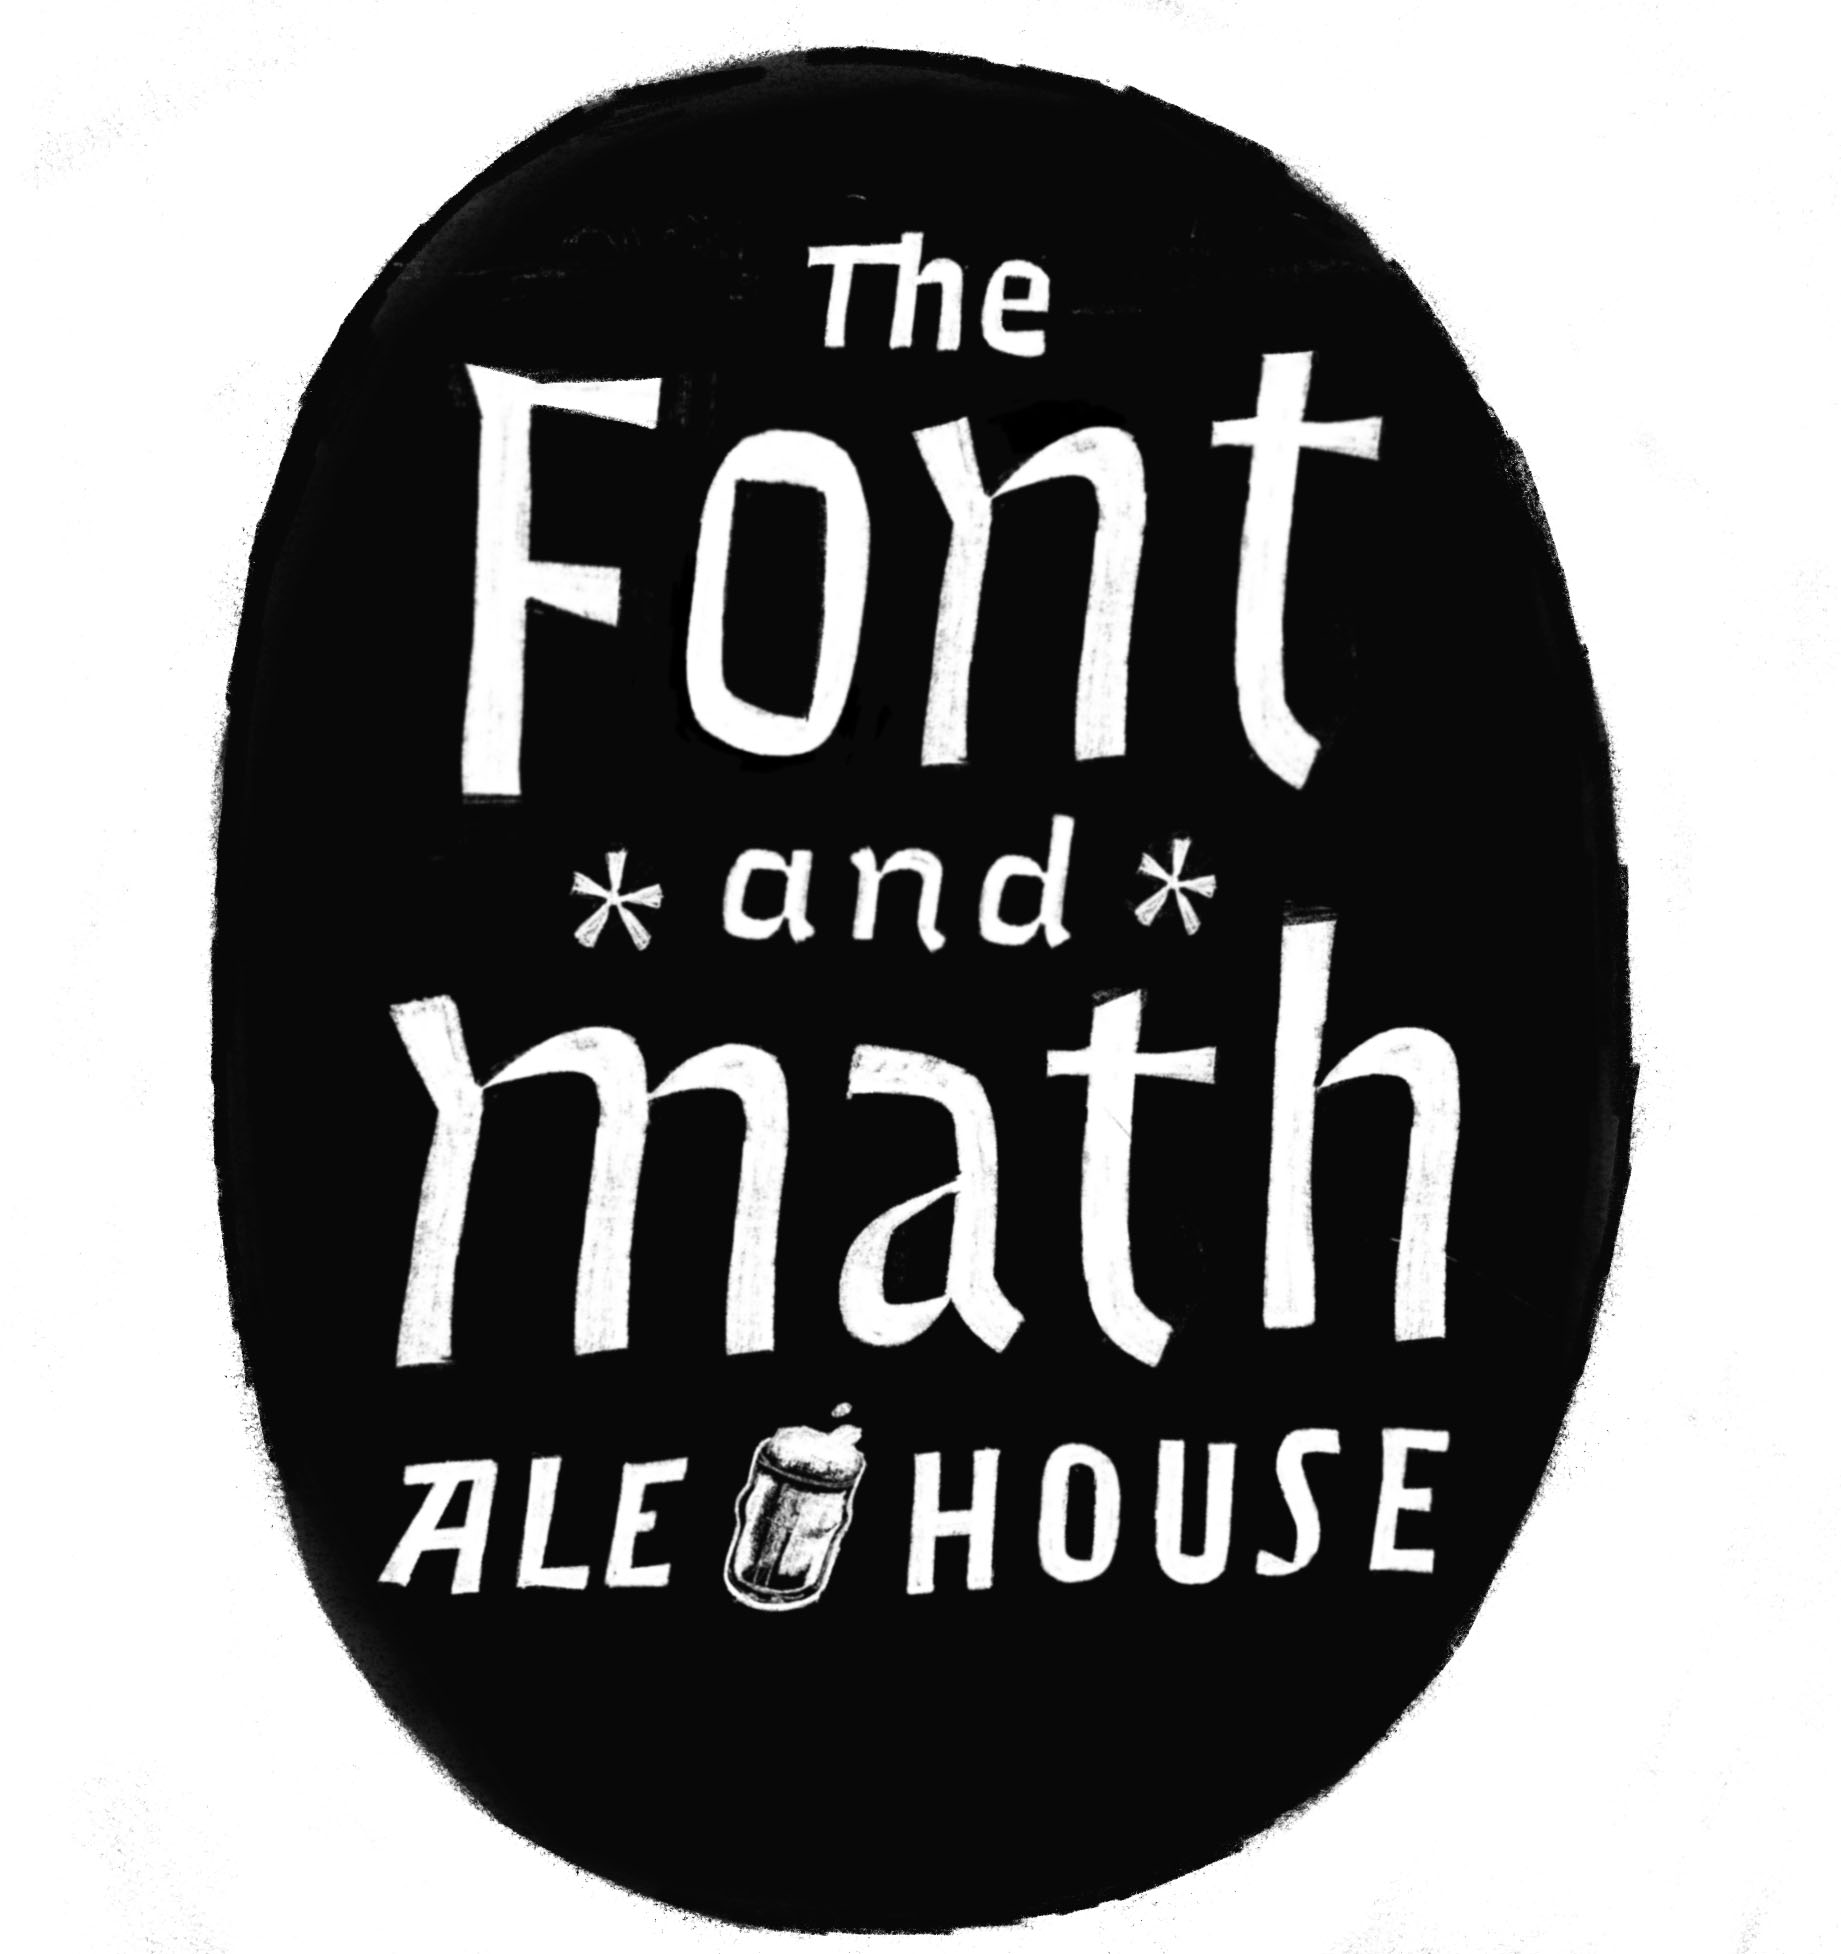 Font and Math Alehouse. We should go.